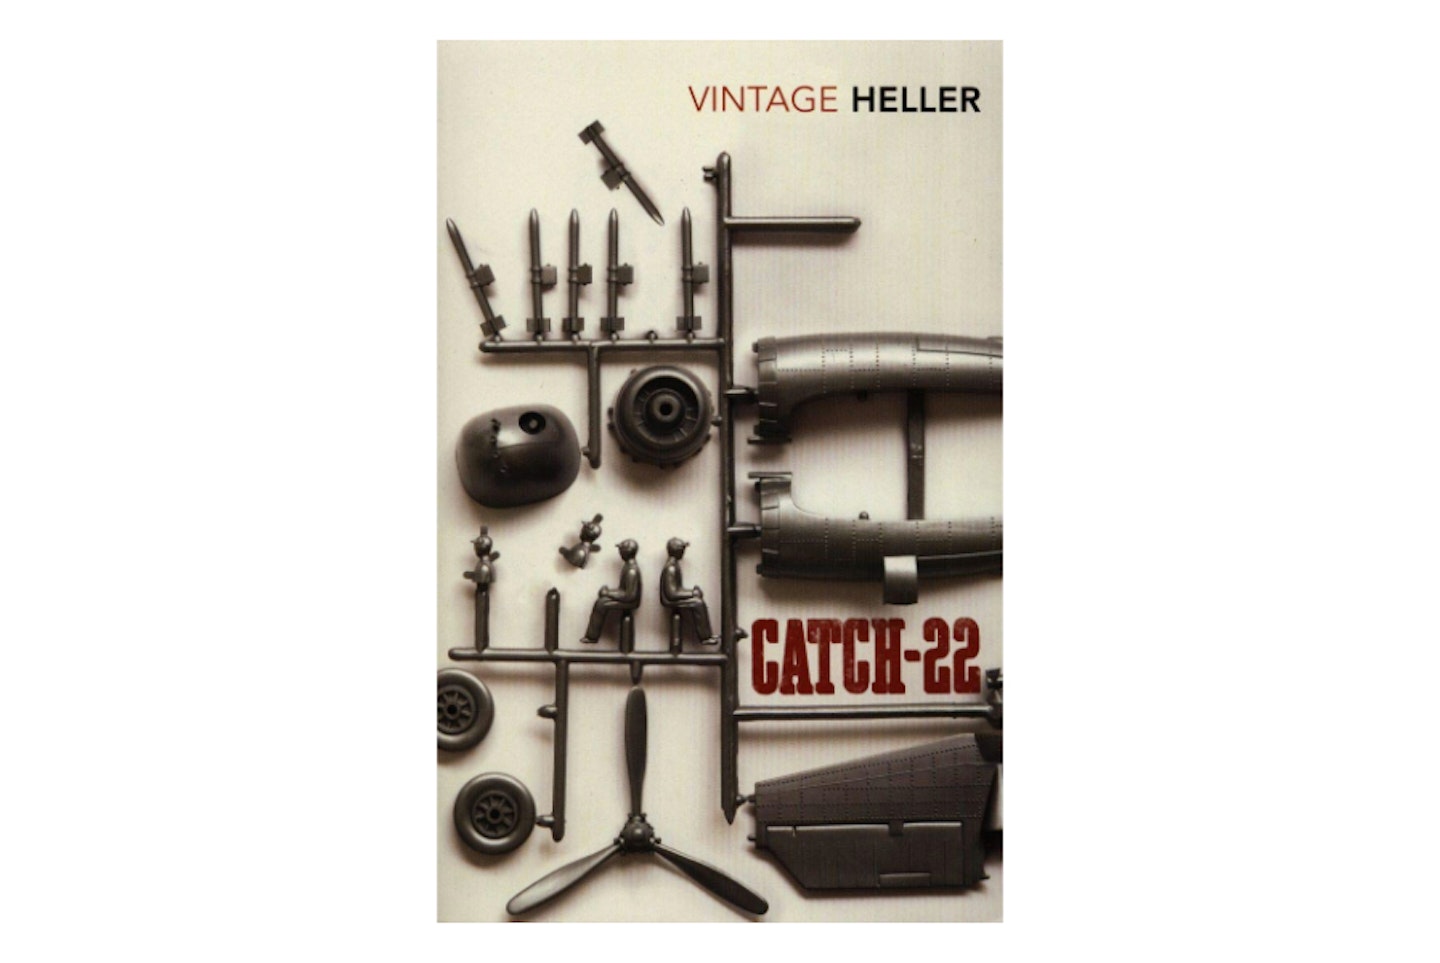 Catch-22 by Joesph Heller